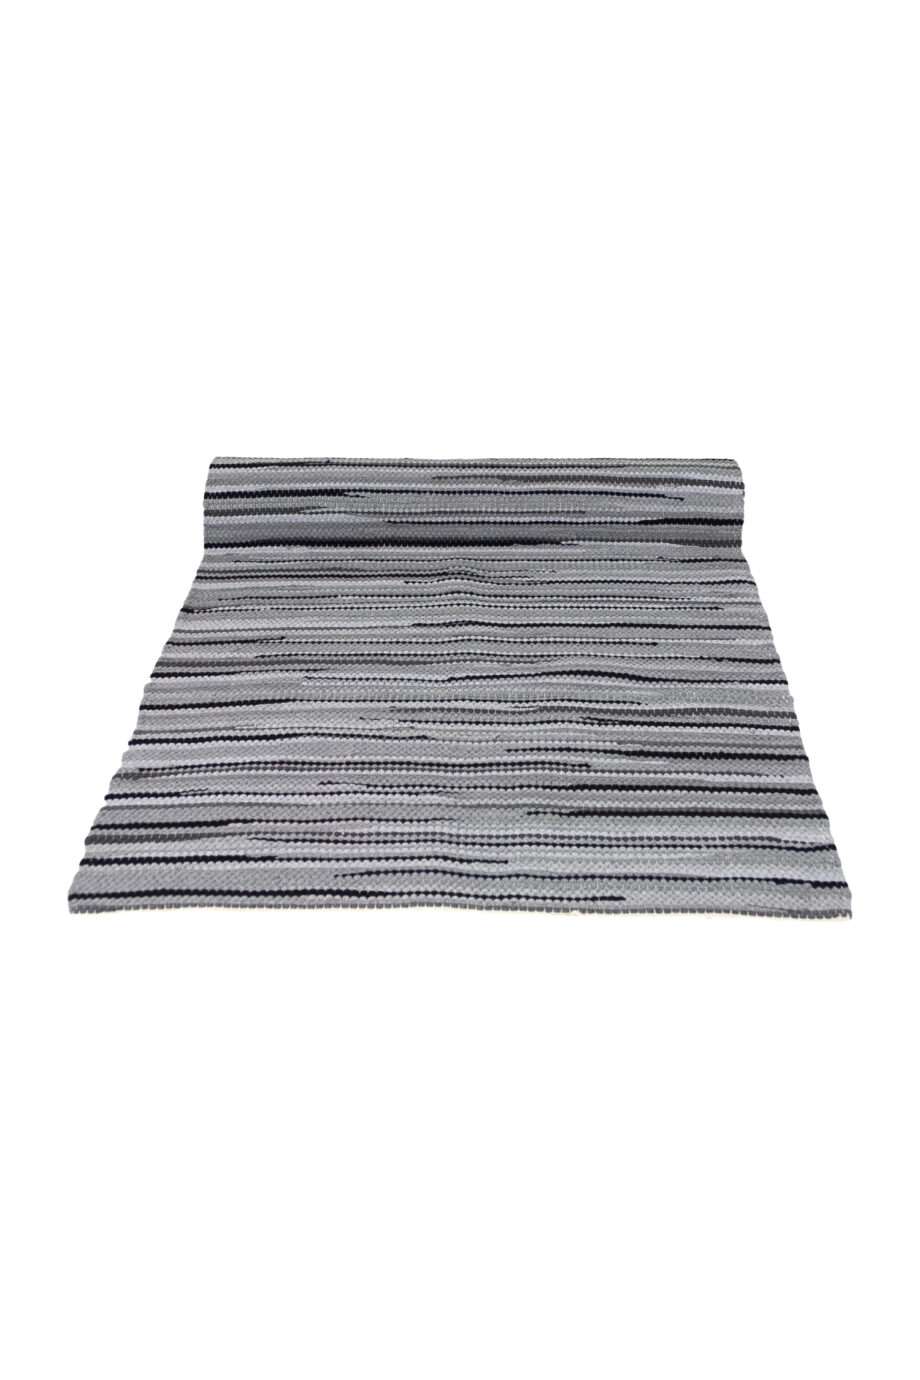 stripy grey woven cotton floor mat small